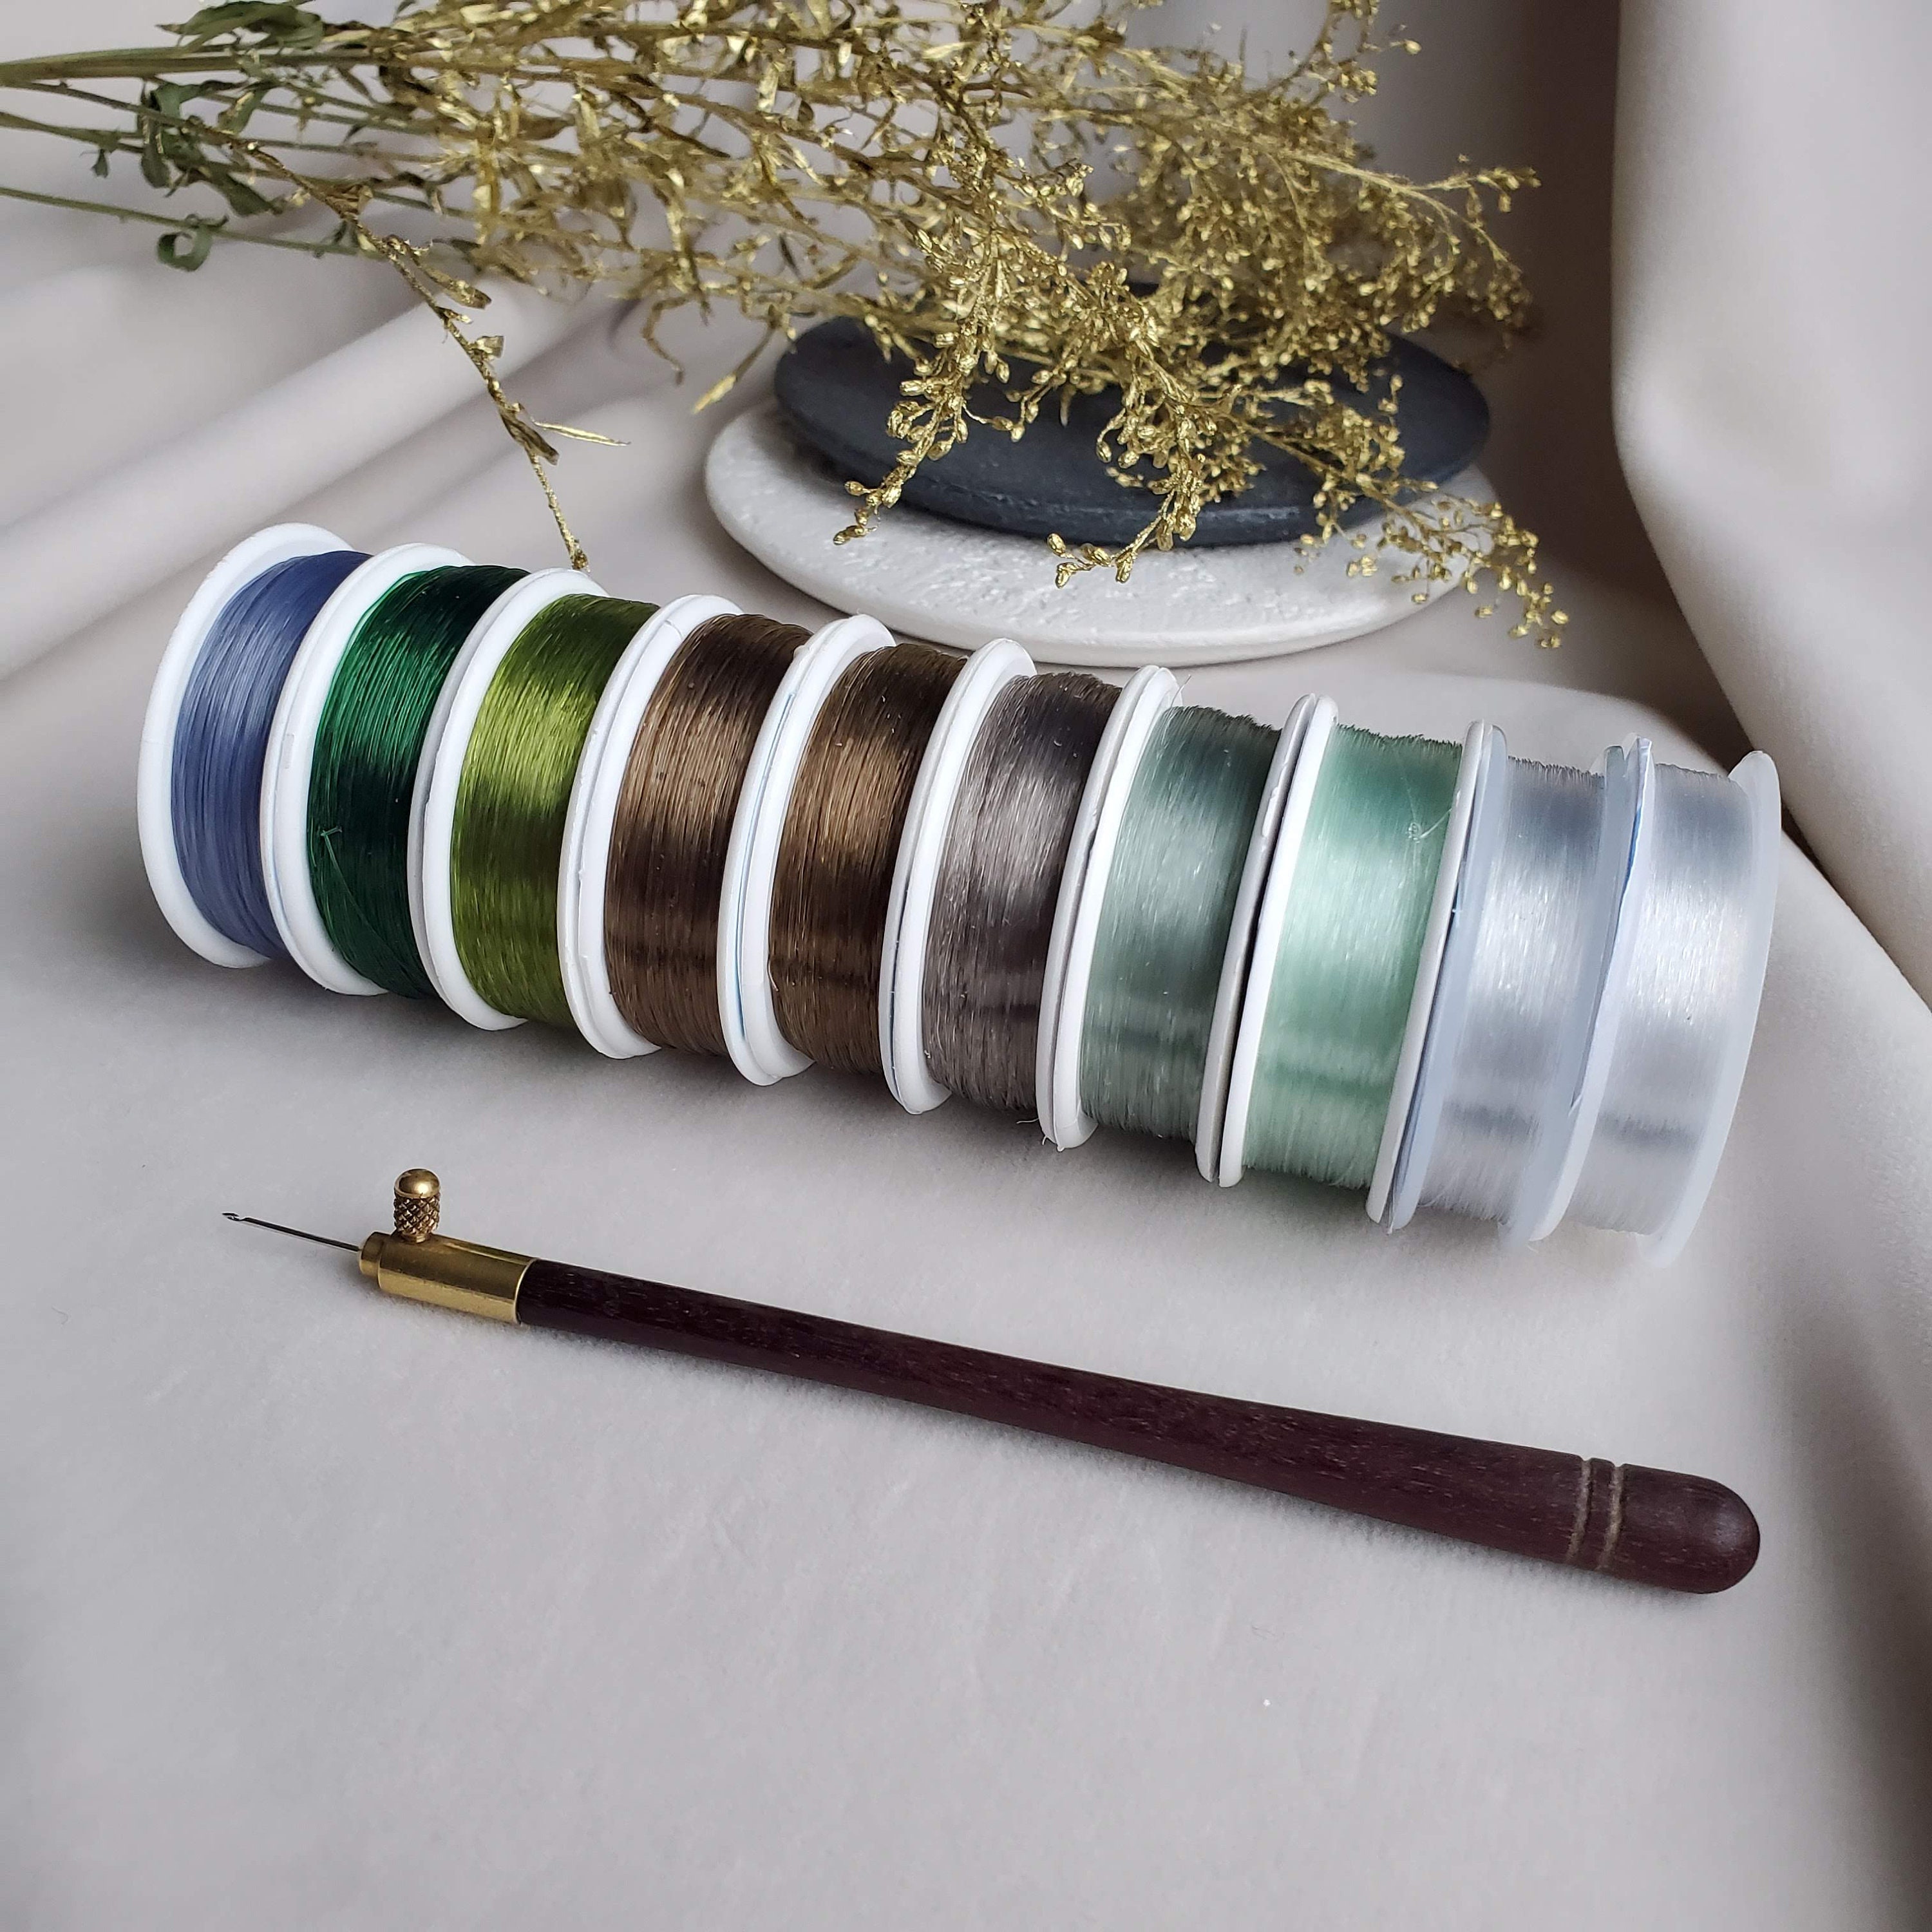 Original Miyuki Mono-Line 0.17mm Monofilament Beading Thread 100m - 110  Yds, Miyuki Delica, illusion cord, Jewelry thread